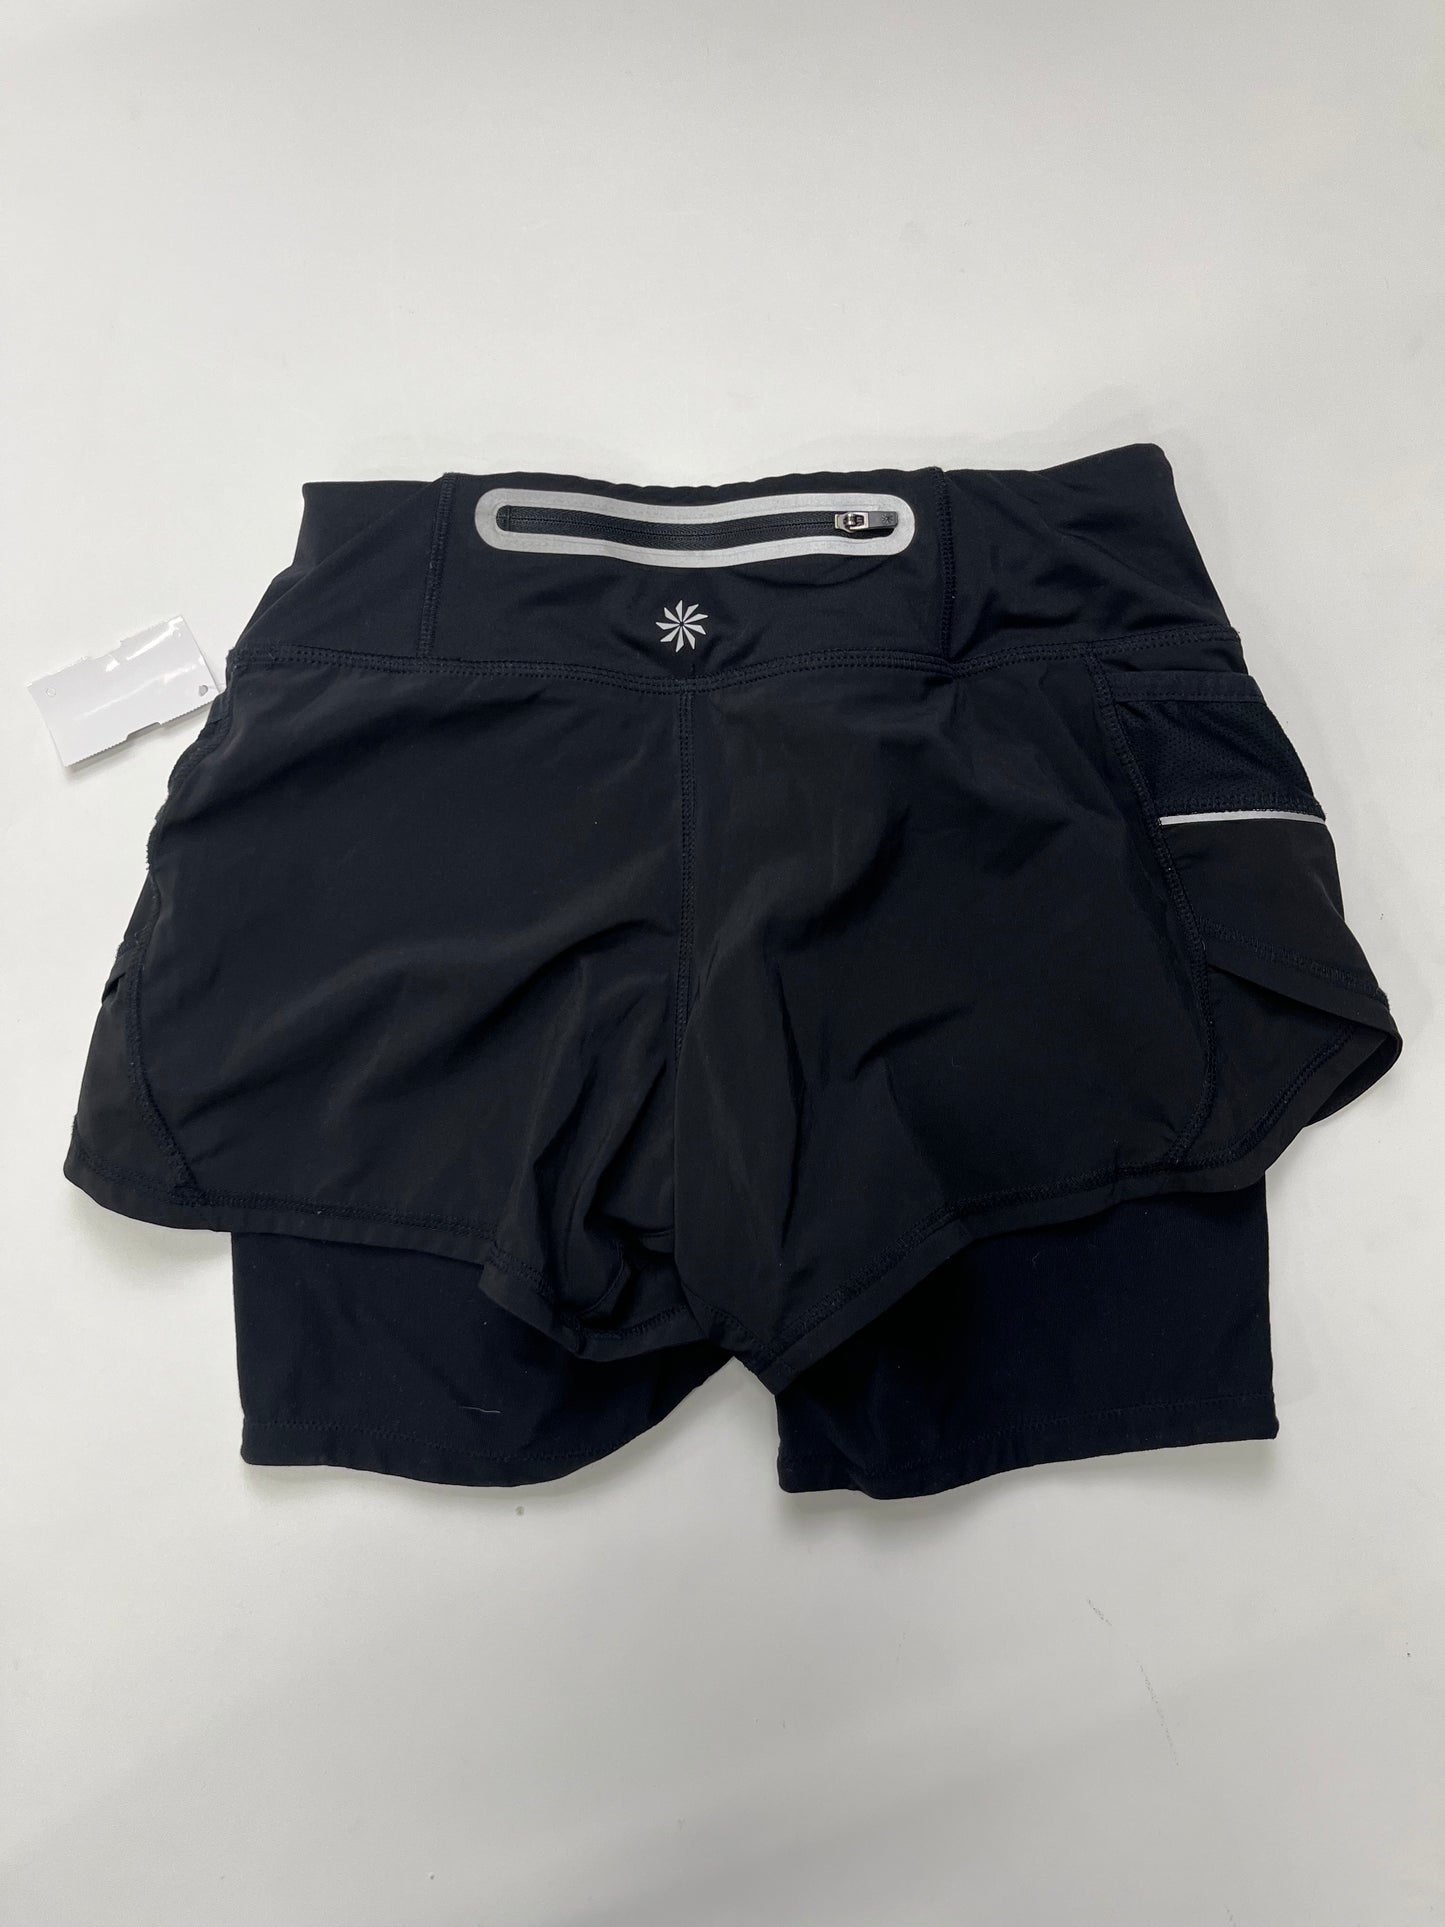 Athletic Shorts By Athleta  Size: Xxs